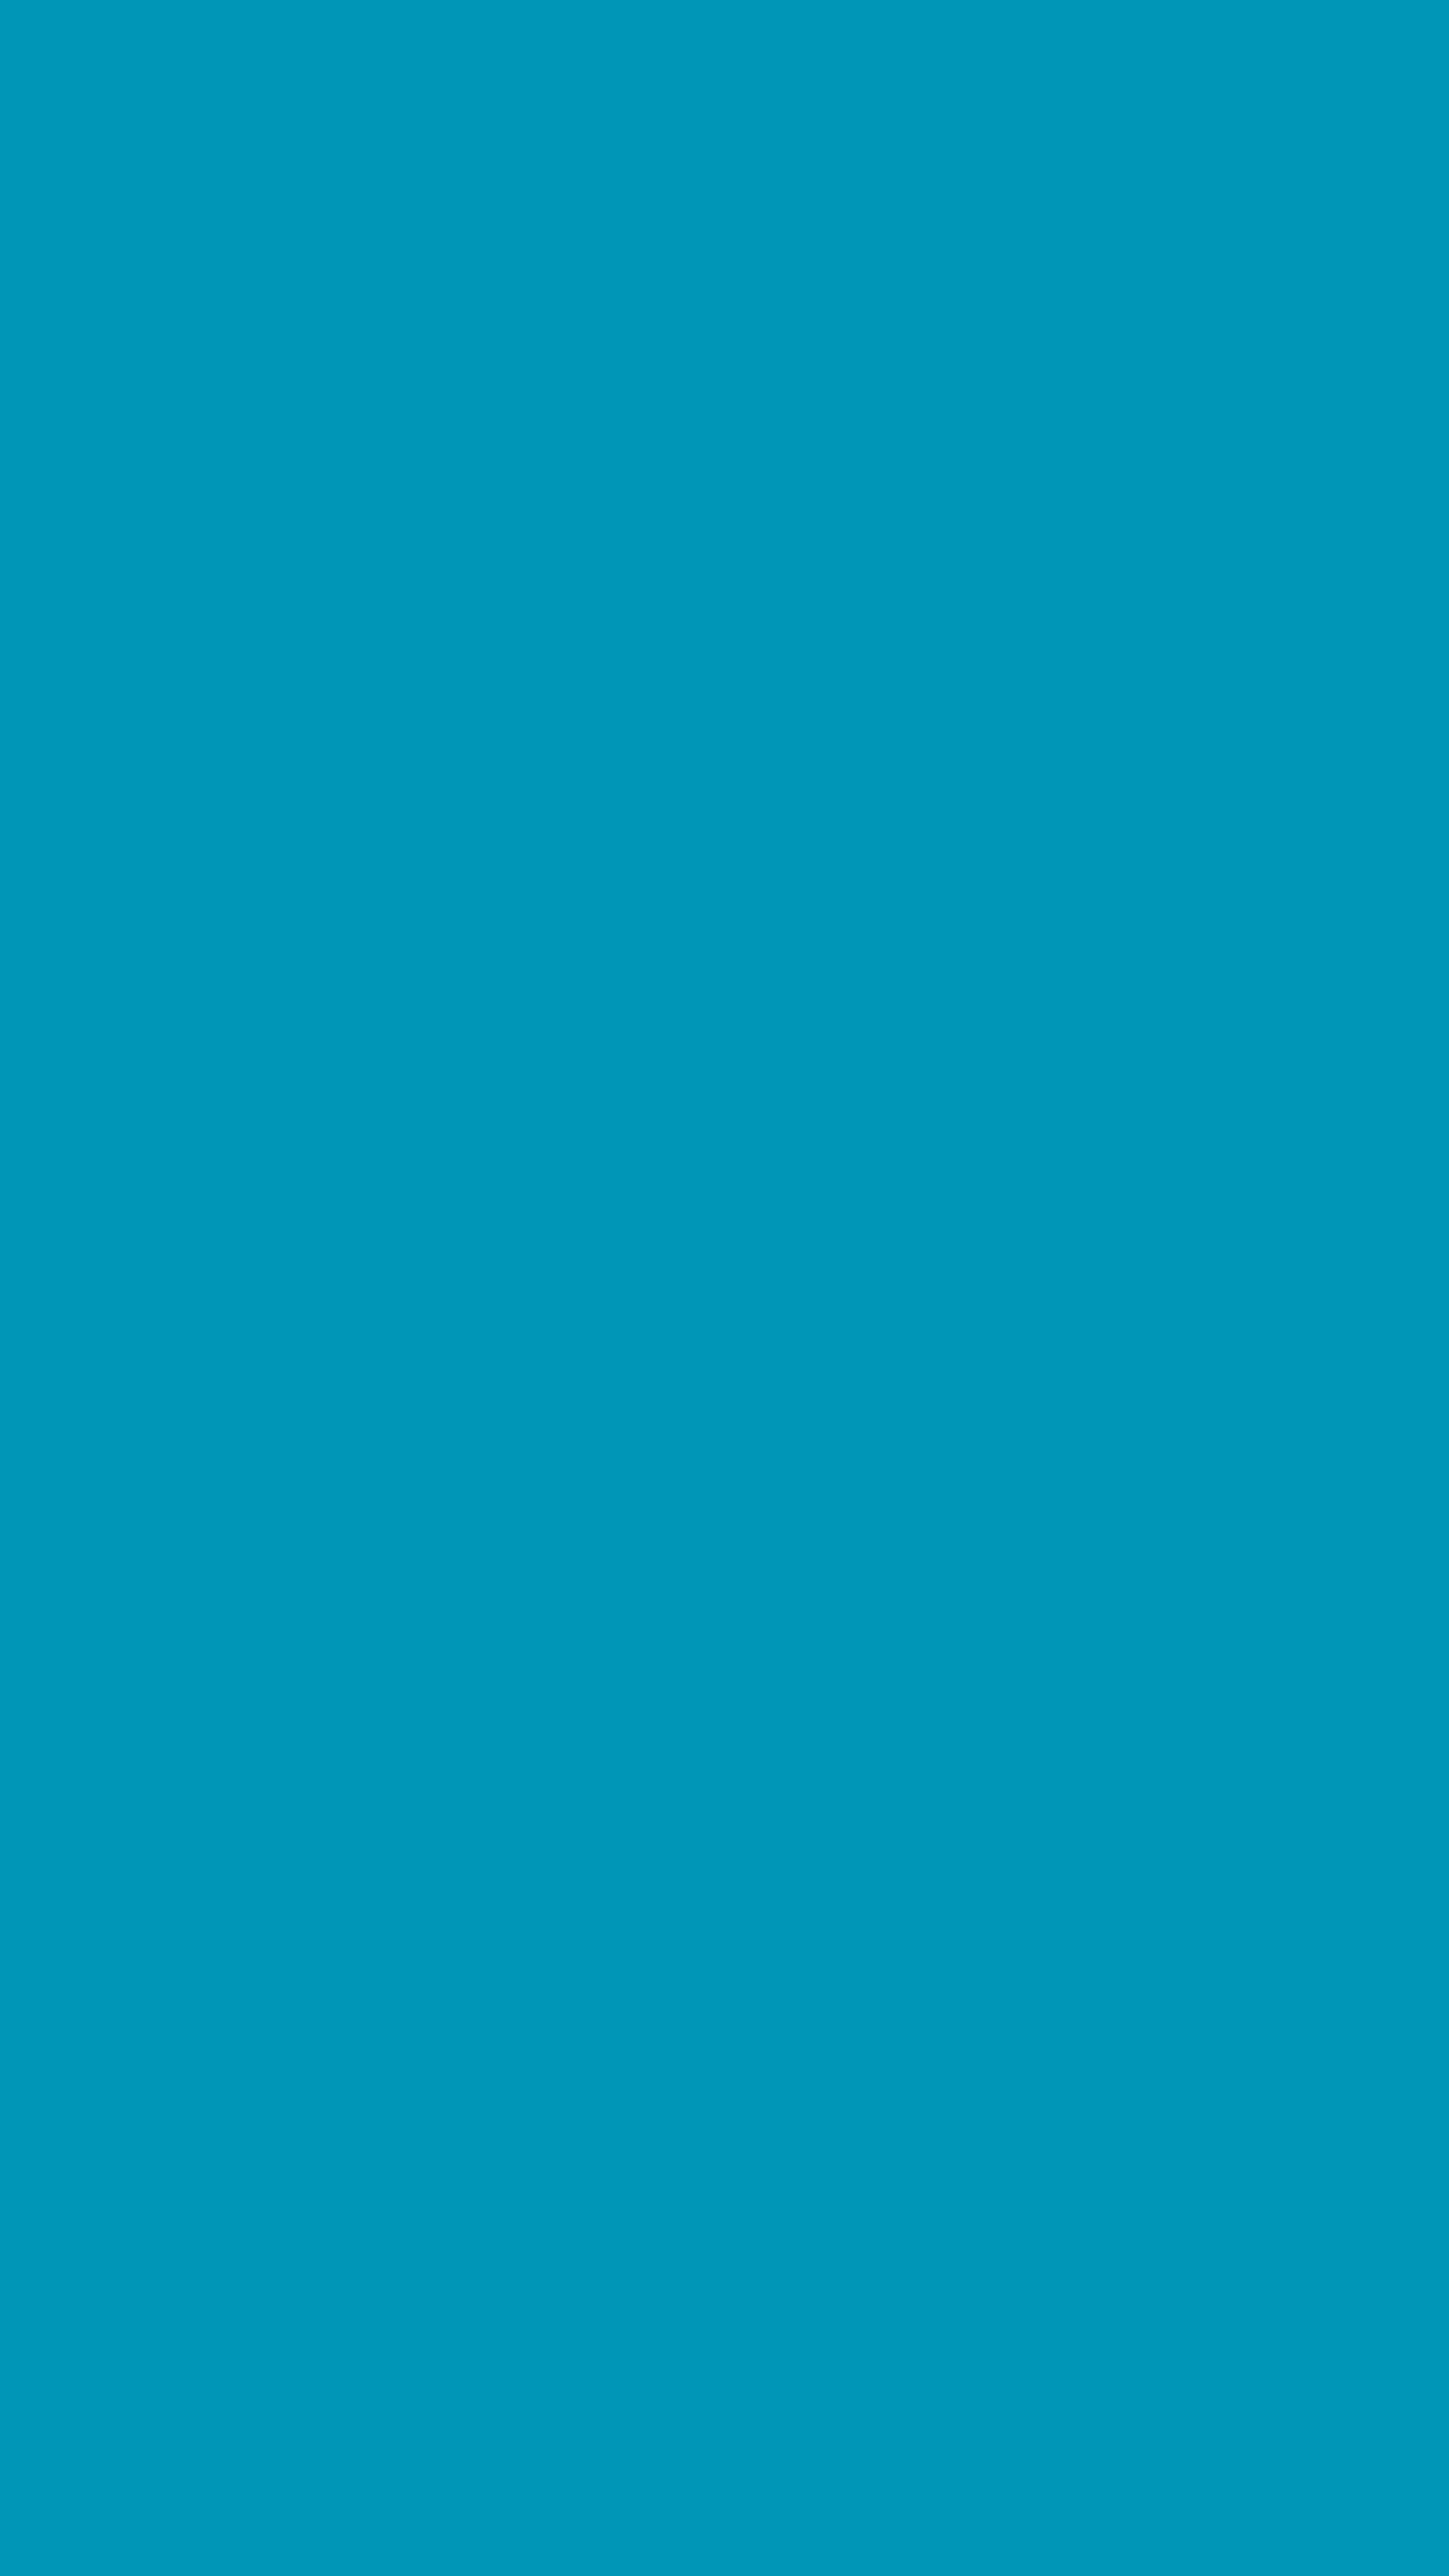 Bondi Blue Solid Color Background Wallpaper for Mobile Phone